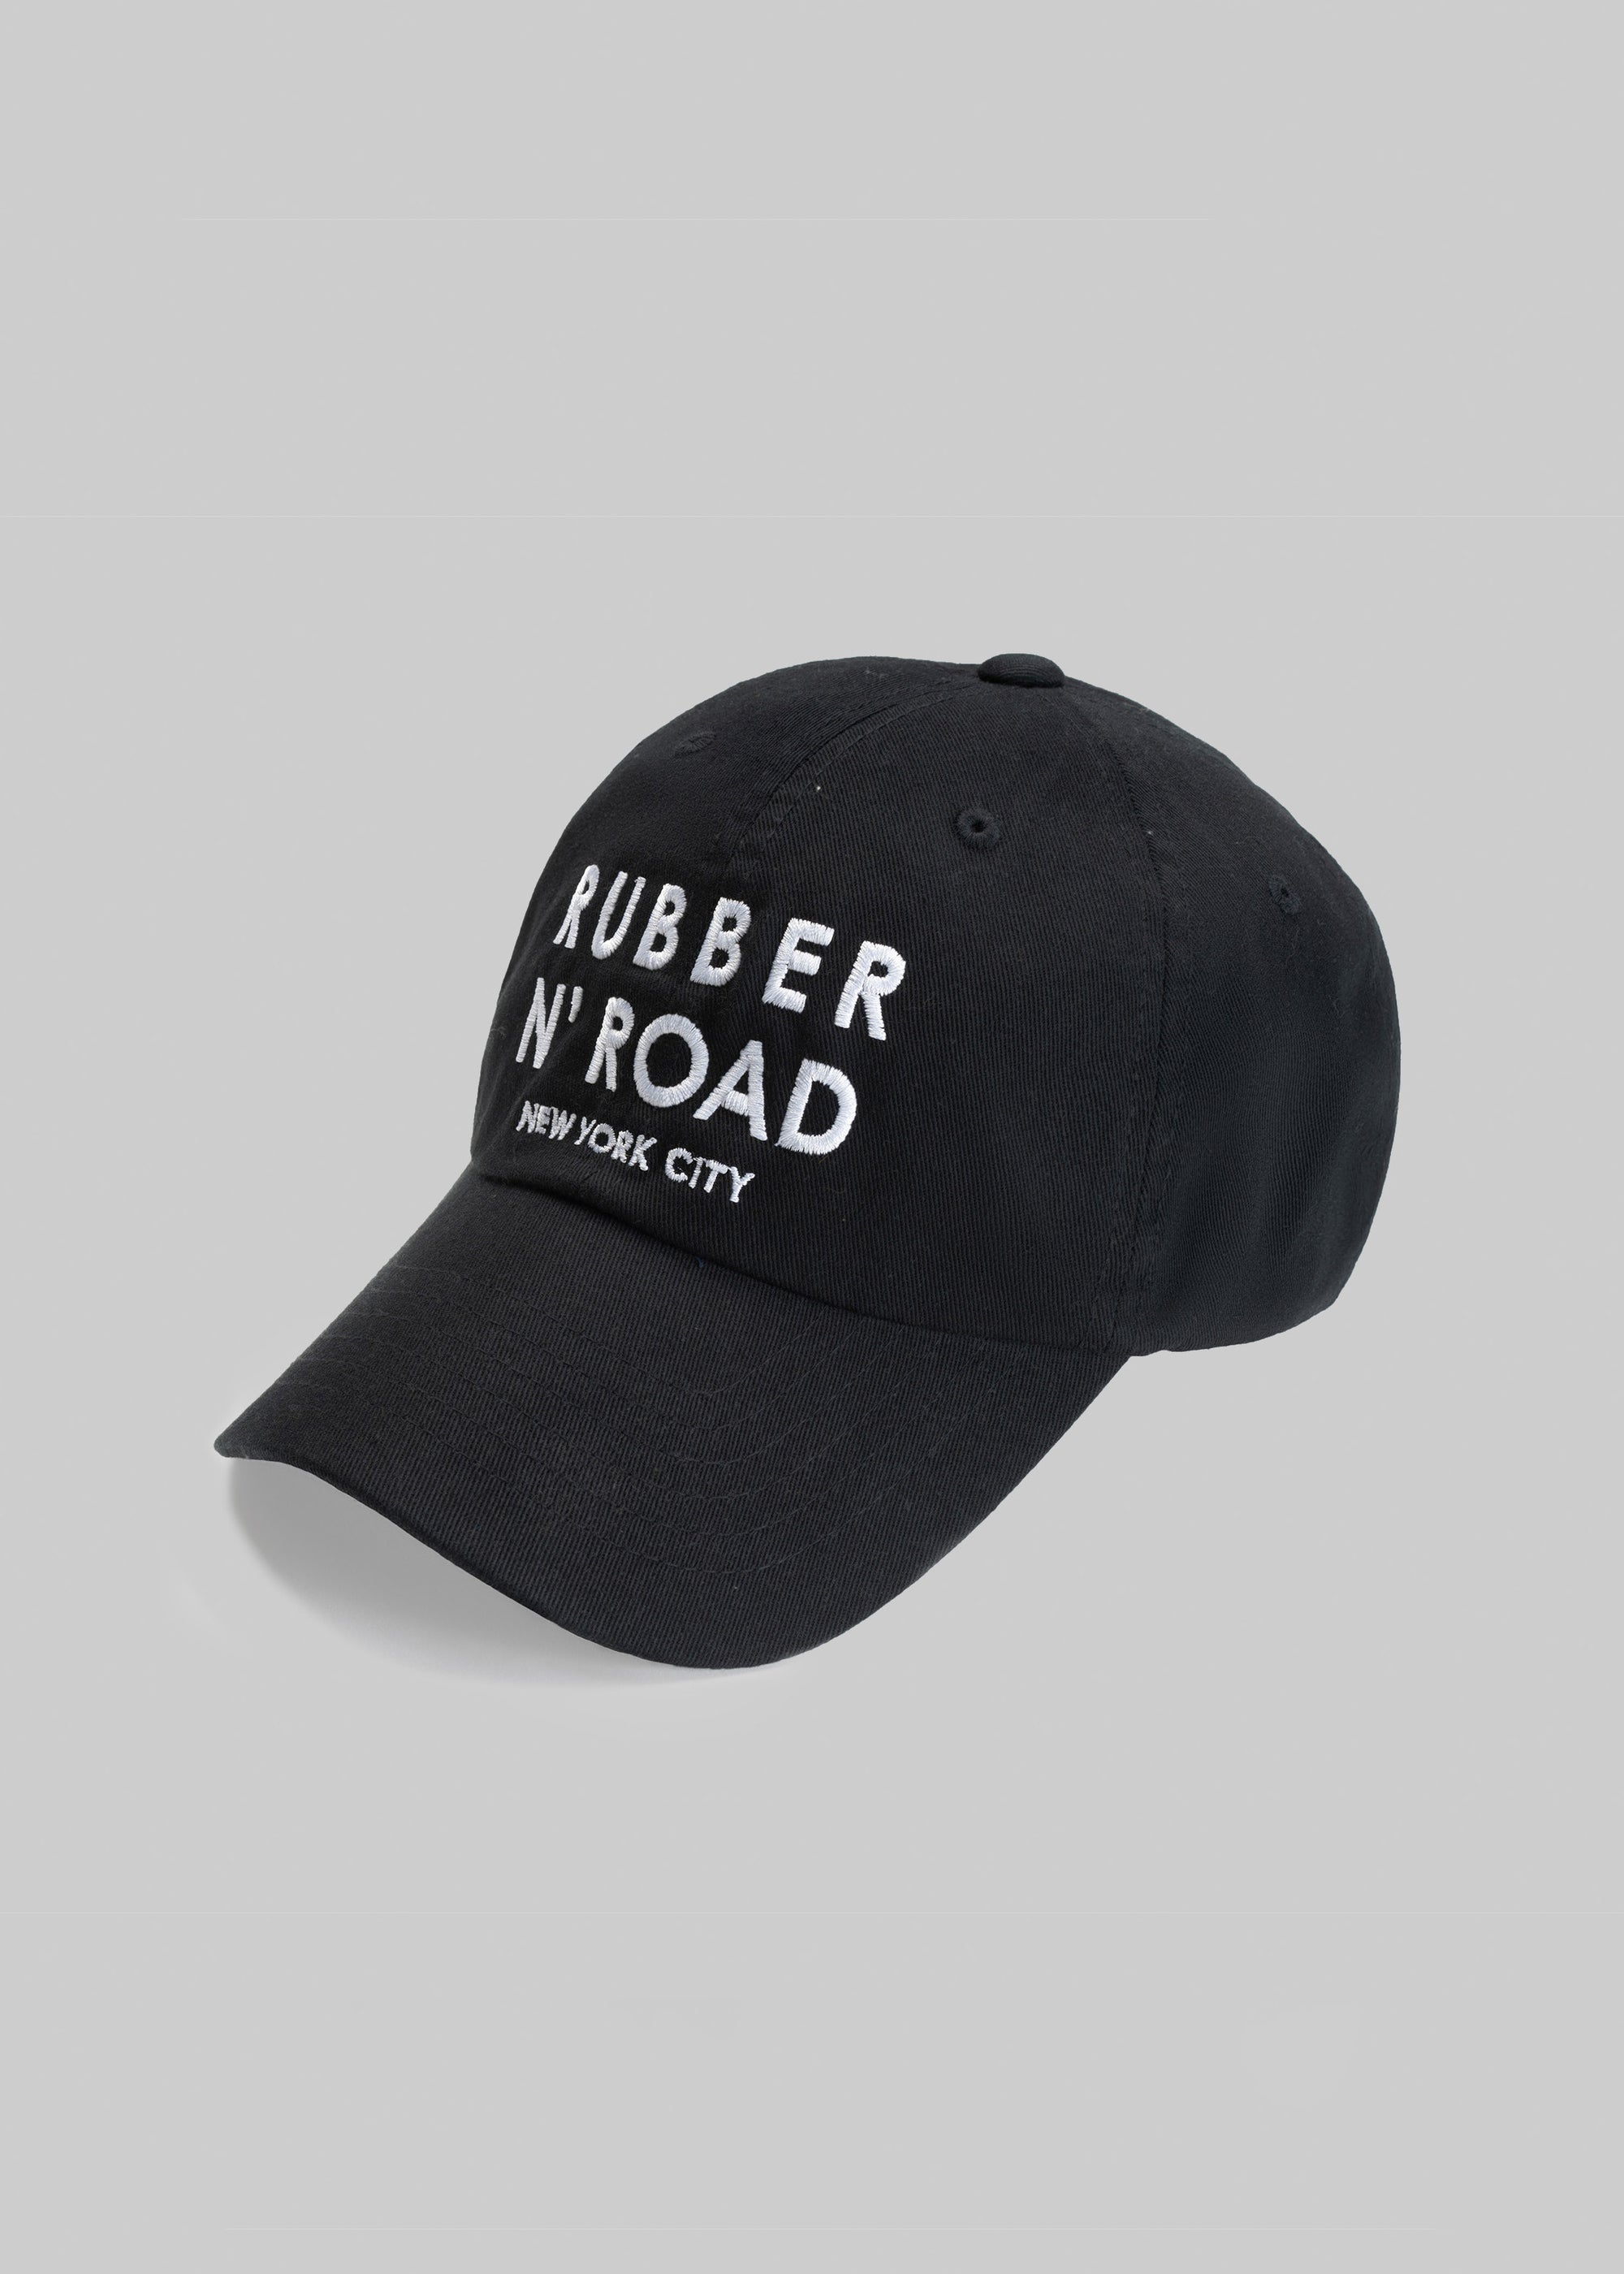 RUBBER N' ROAD Spectator Cap - Black